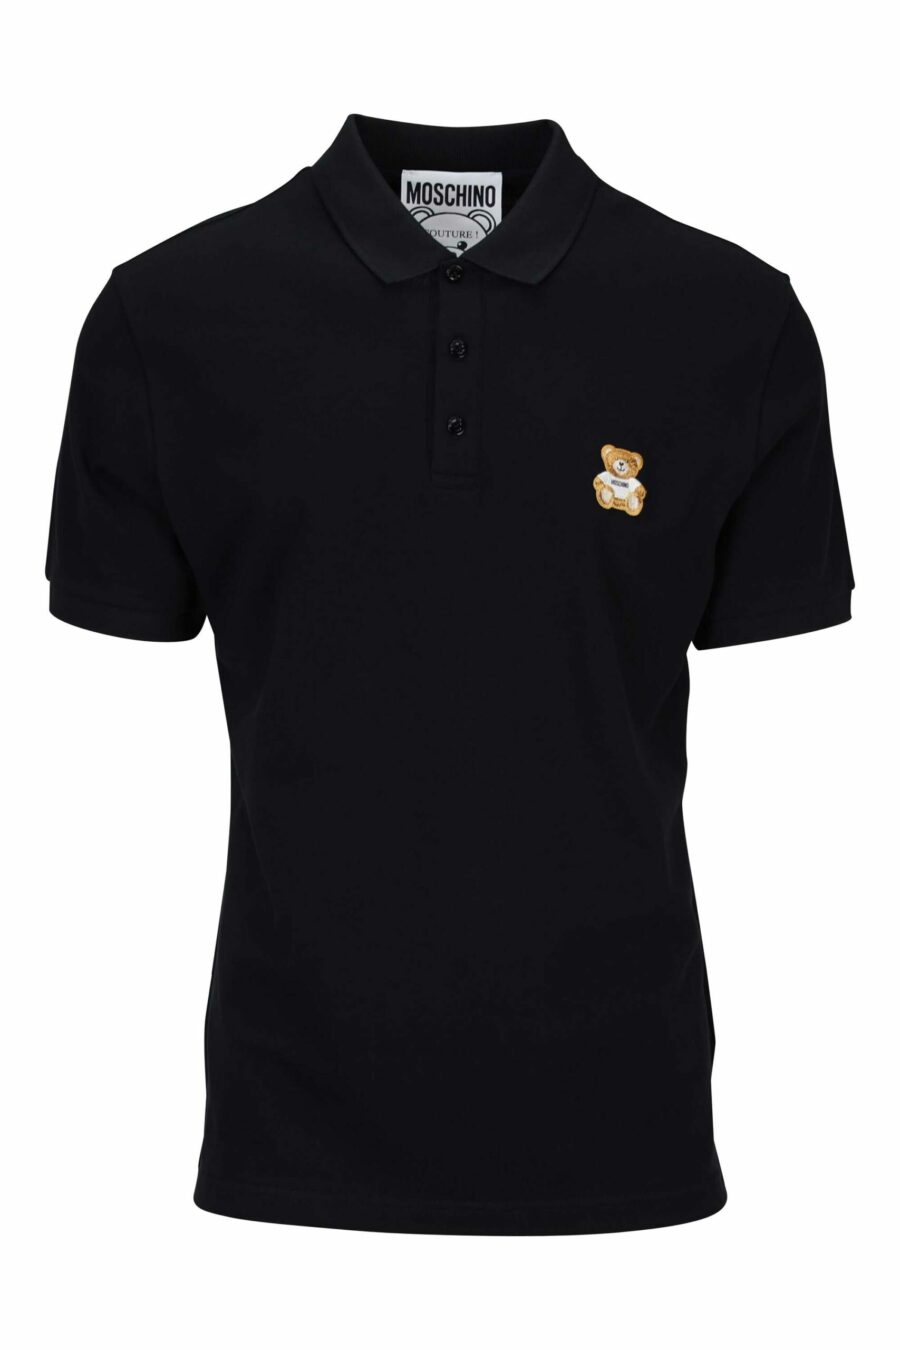 Polo noir avec logo "teddy" brodé - 667113458069